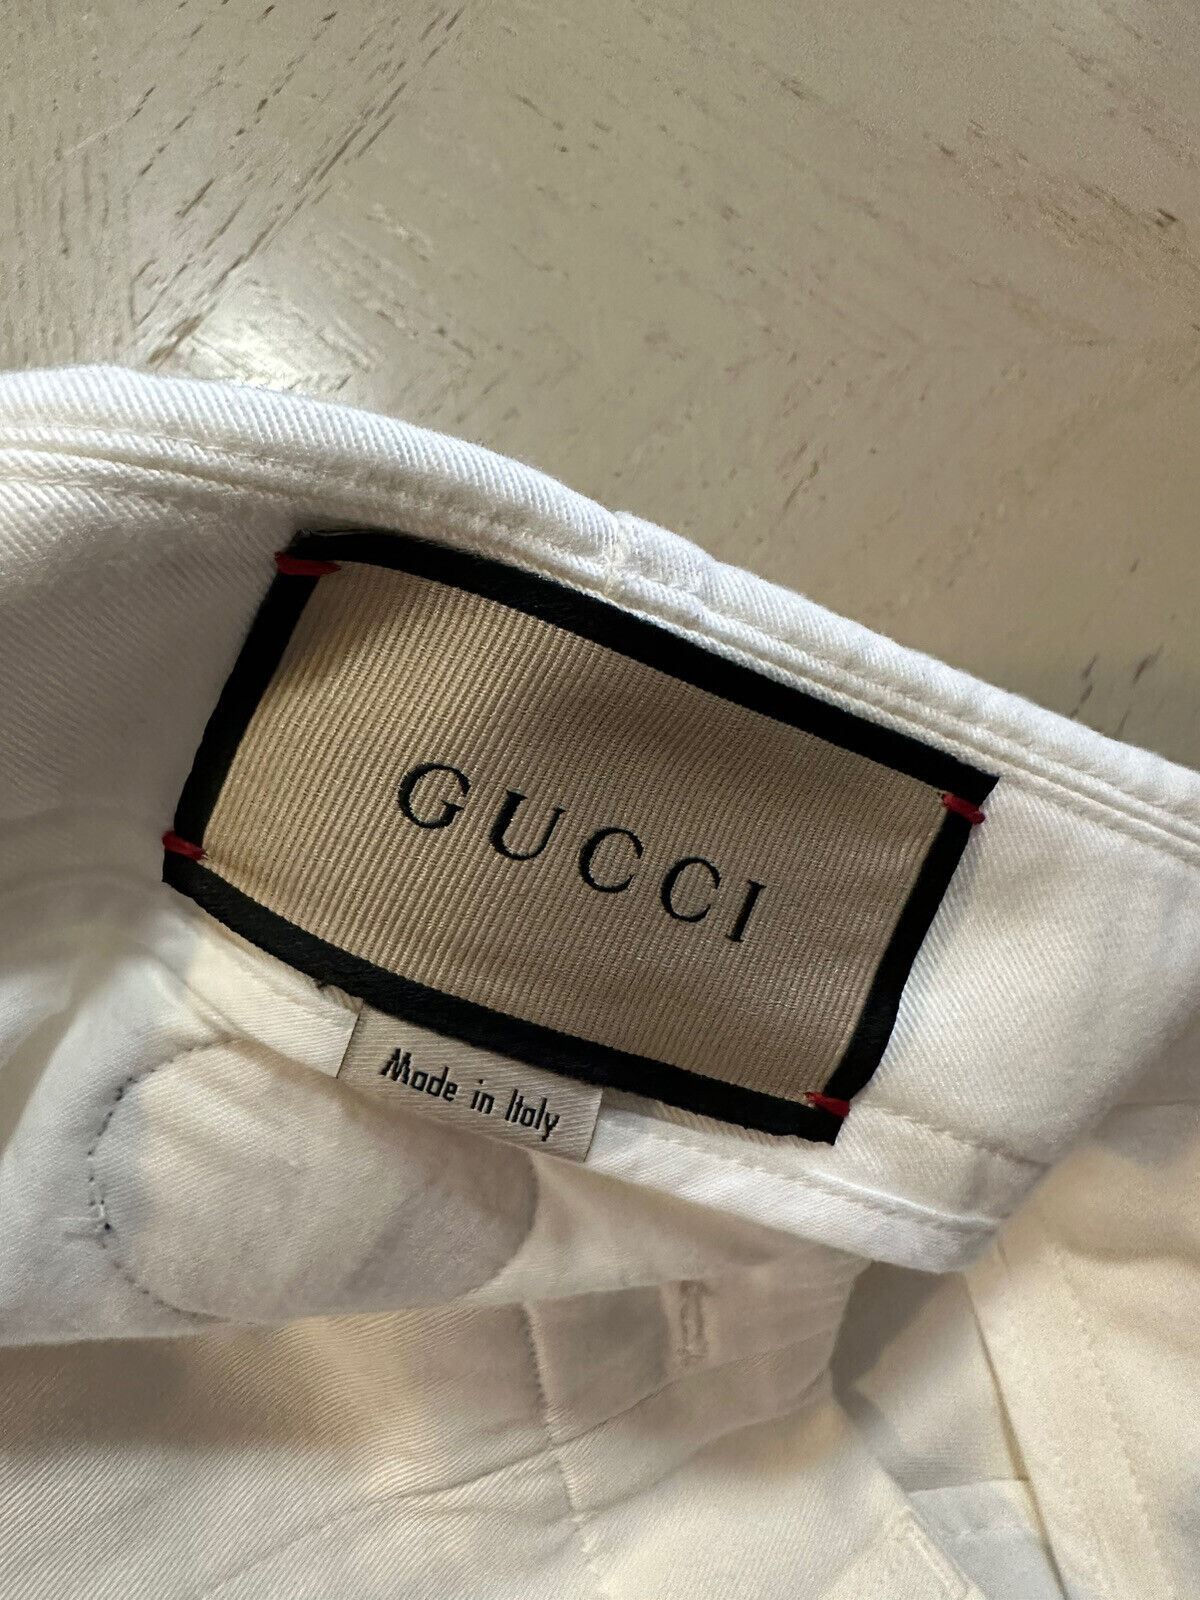 СЗТ $880 Мужские хлопковые короткие брюки Gucci в стиле милитари молочного цвета 30 США/46 ЕС Италия